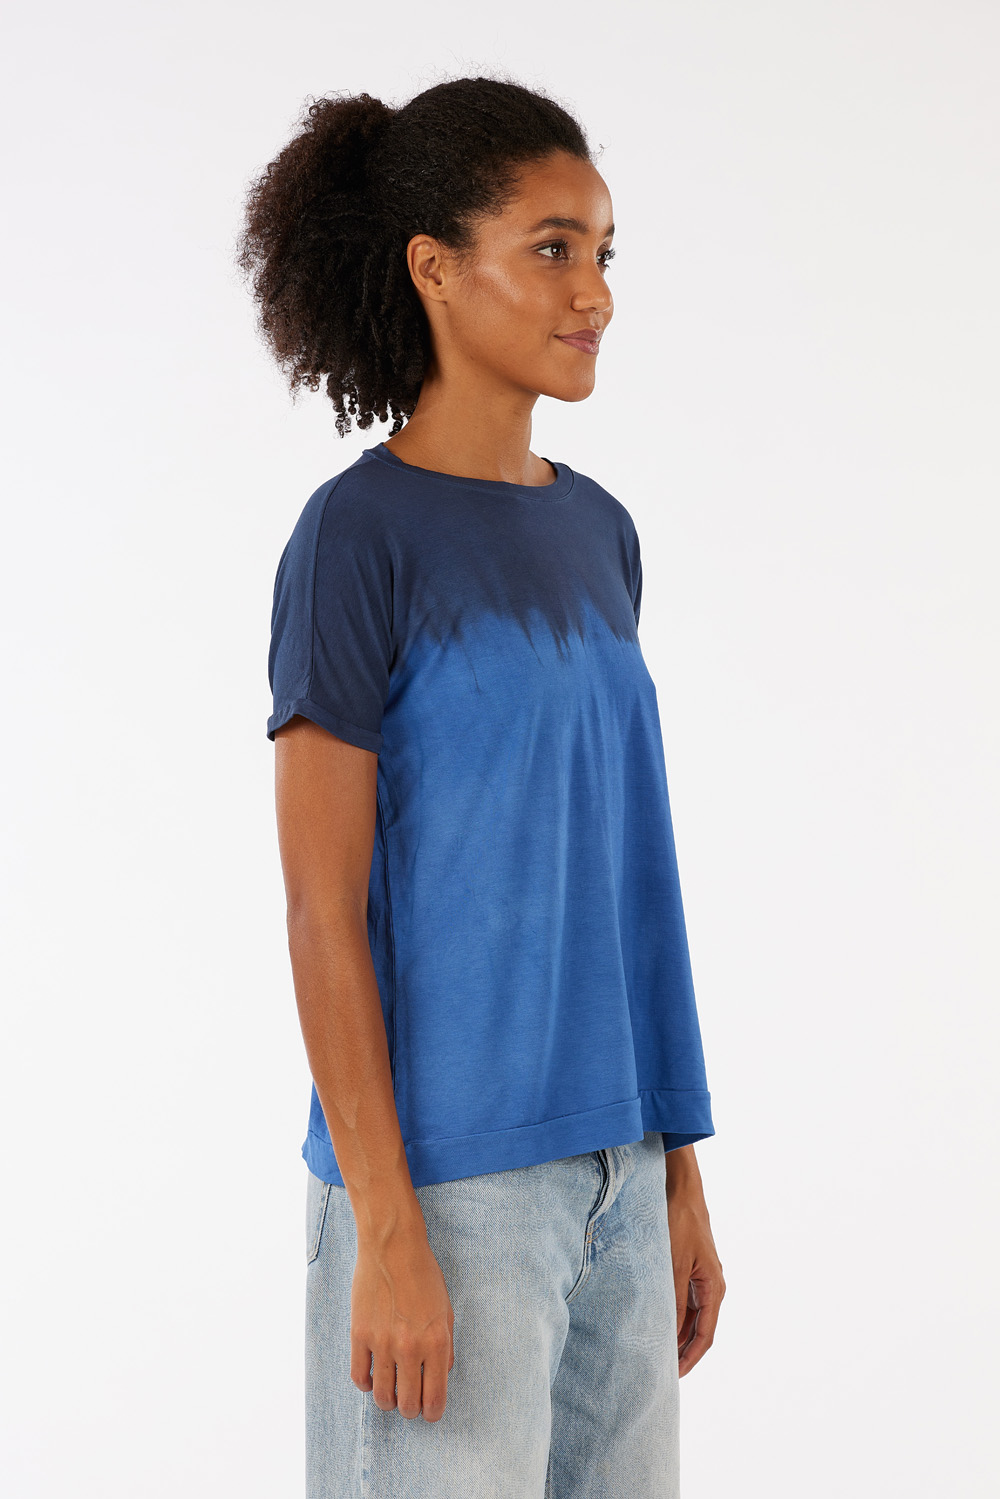 Boat neck T-shirt in microfibre jersey, garment-dye technique